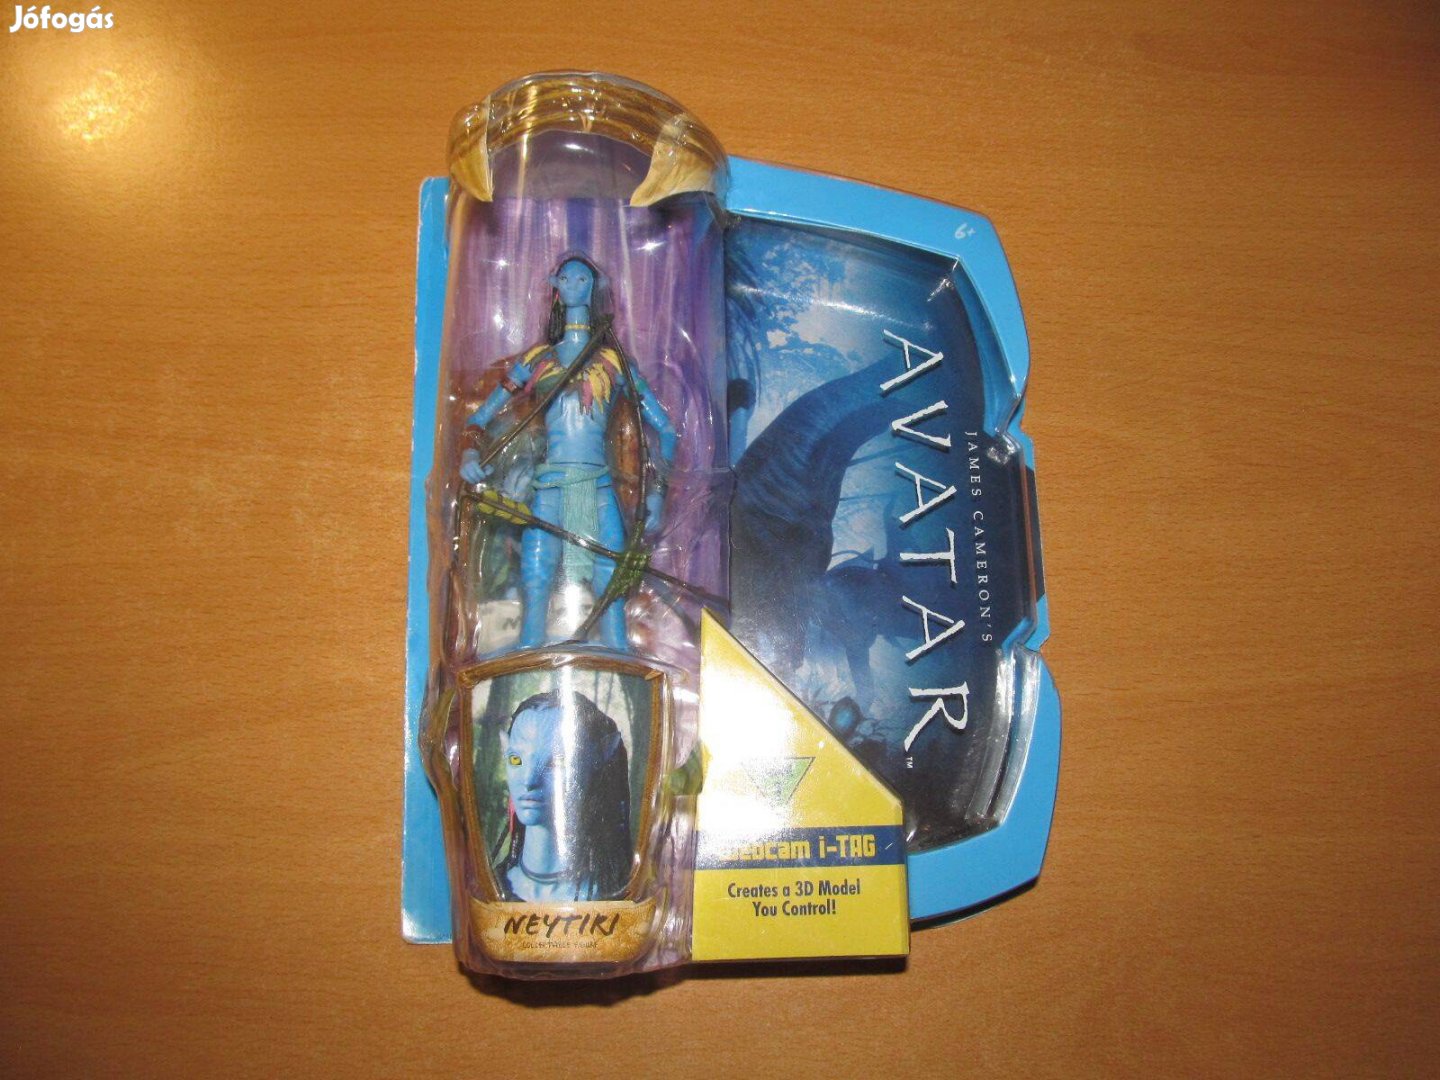 Régi bontatlan Avatar figura: Neytiri (Mattel, 2009)